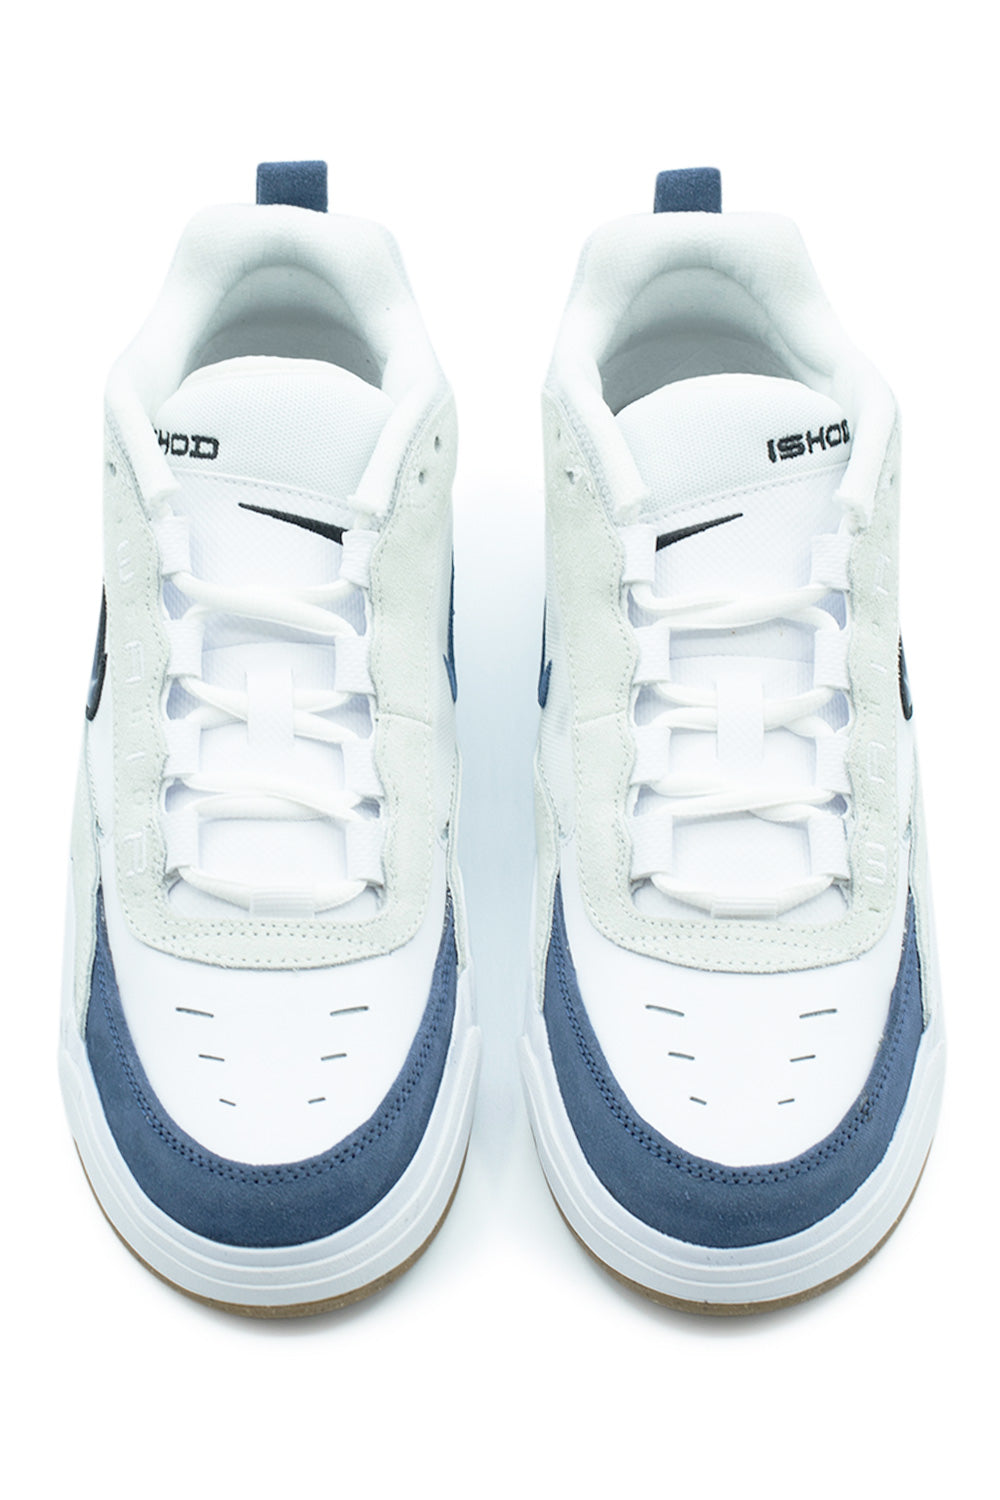 Nike SB Air Max Ishod Shoe White / Navy / Summit White / Black - BONKERS